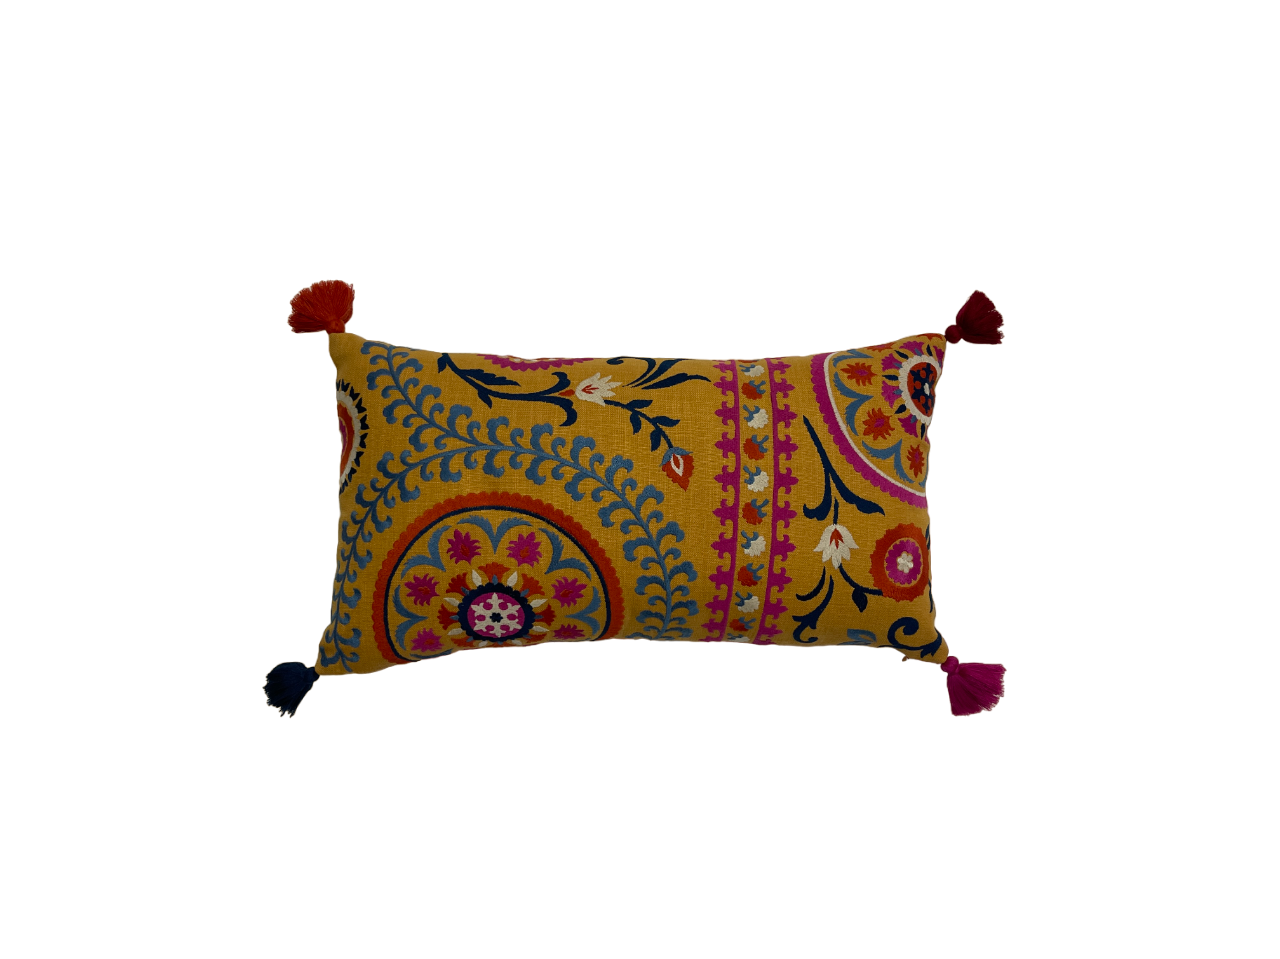 Tashkent Suzani Embroidered Mustard Cushion Cover with Tassels